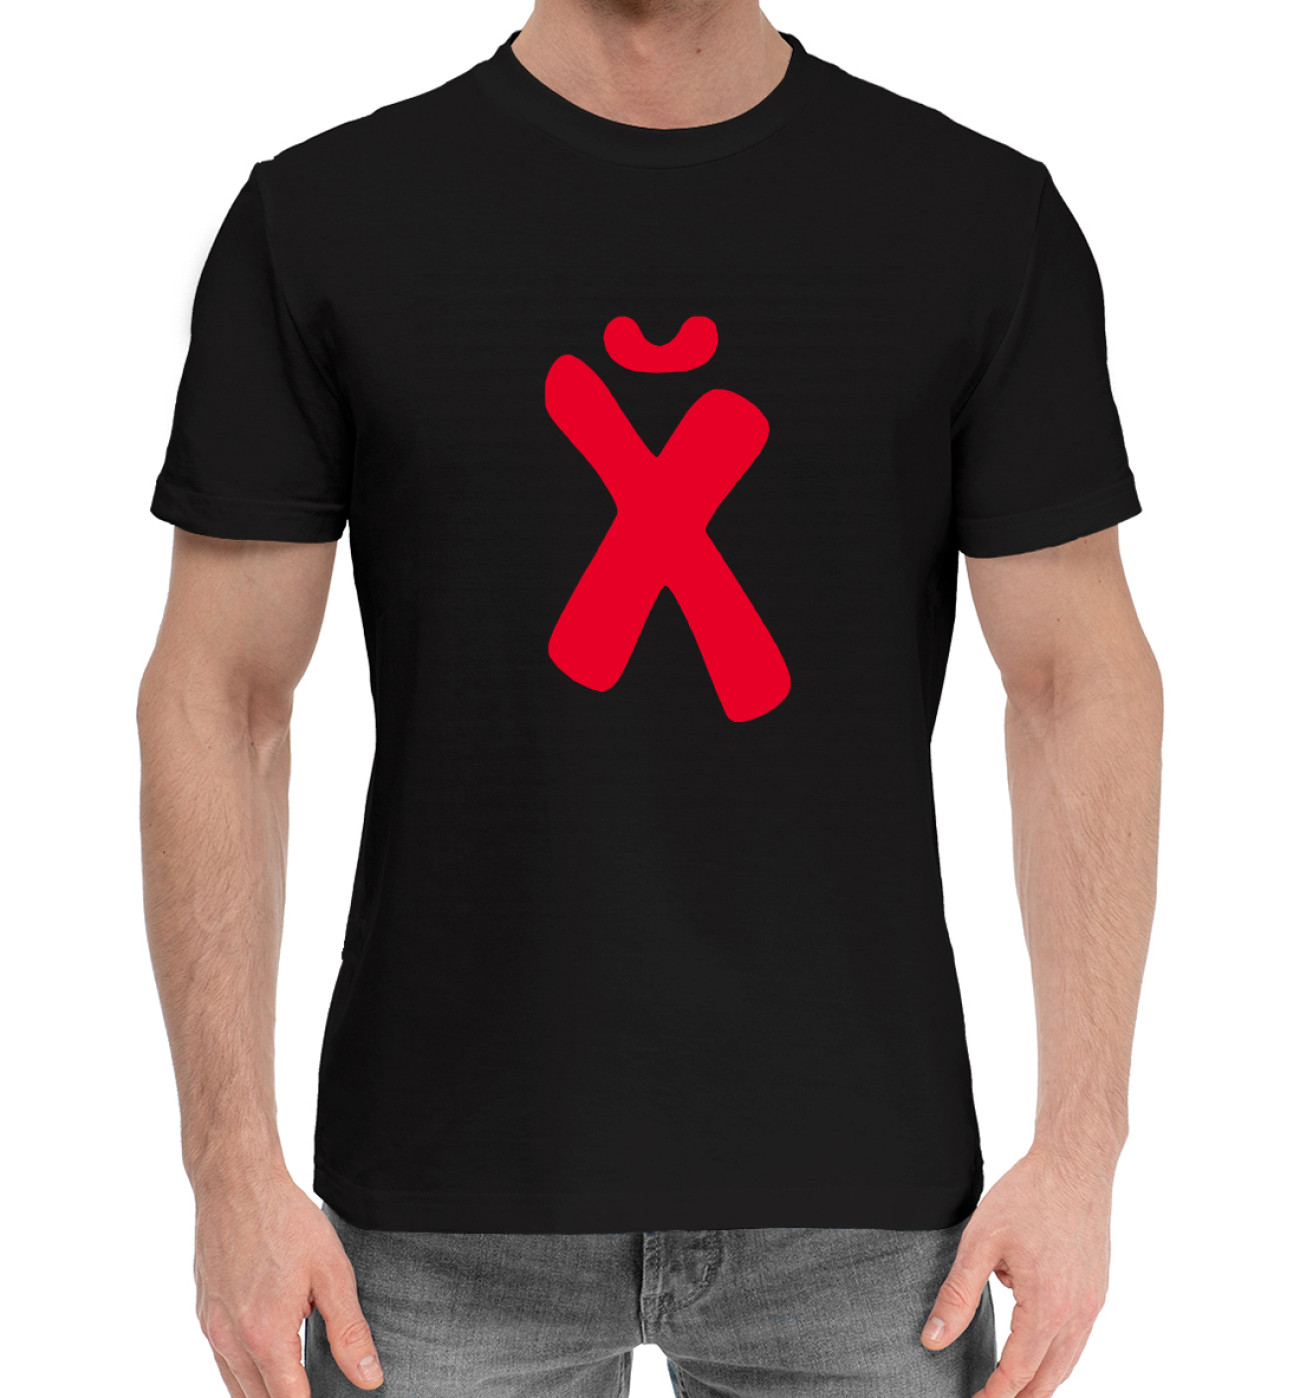 Мужская Хлопковая футболка Х, артикул: CEN-701364-hfu-2